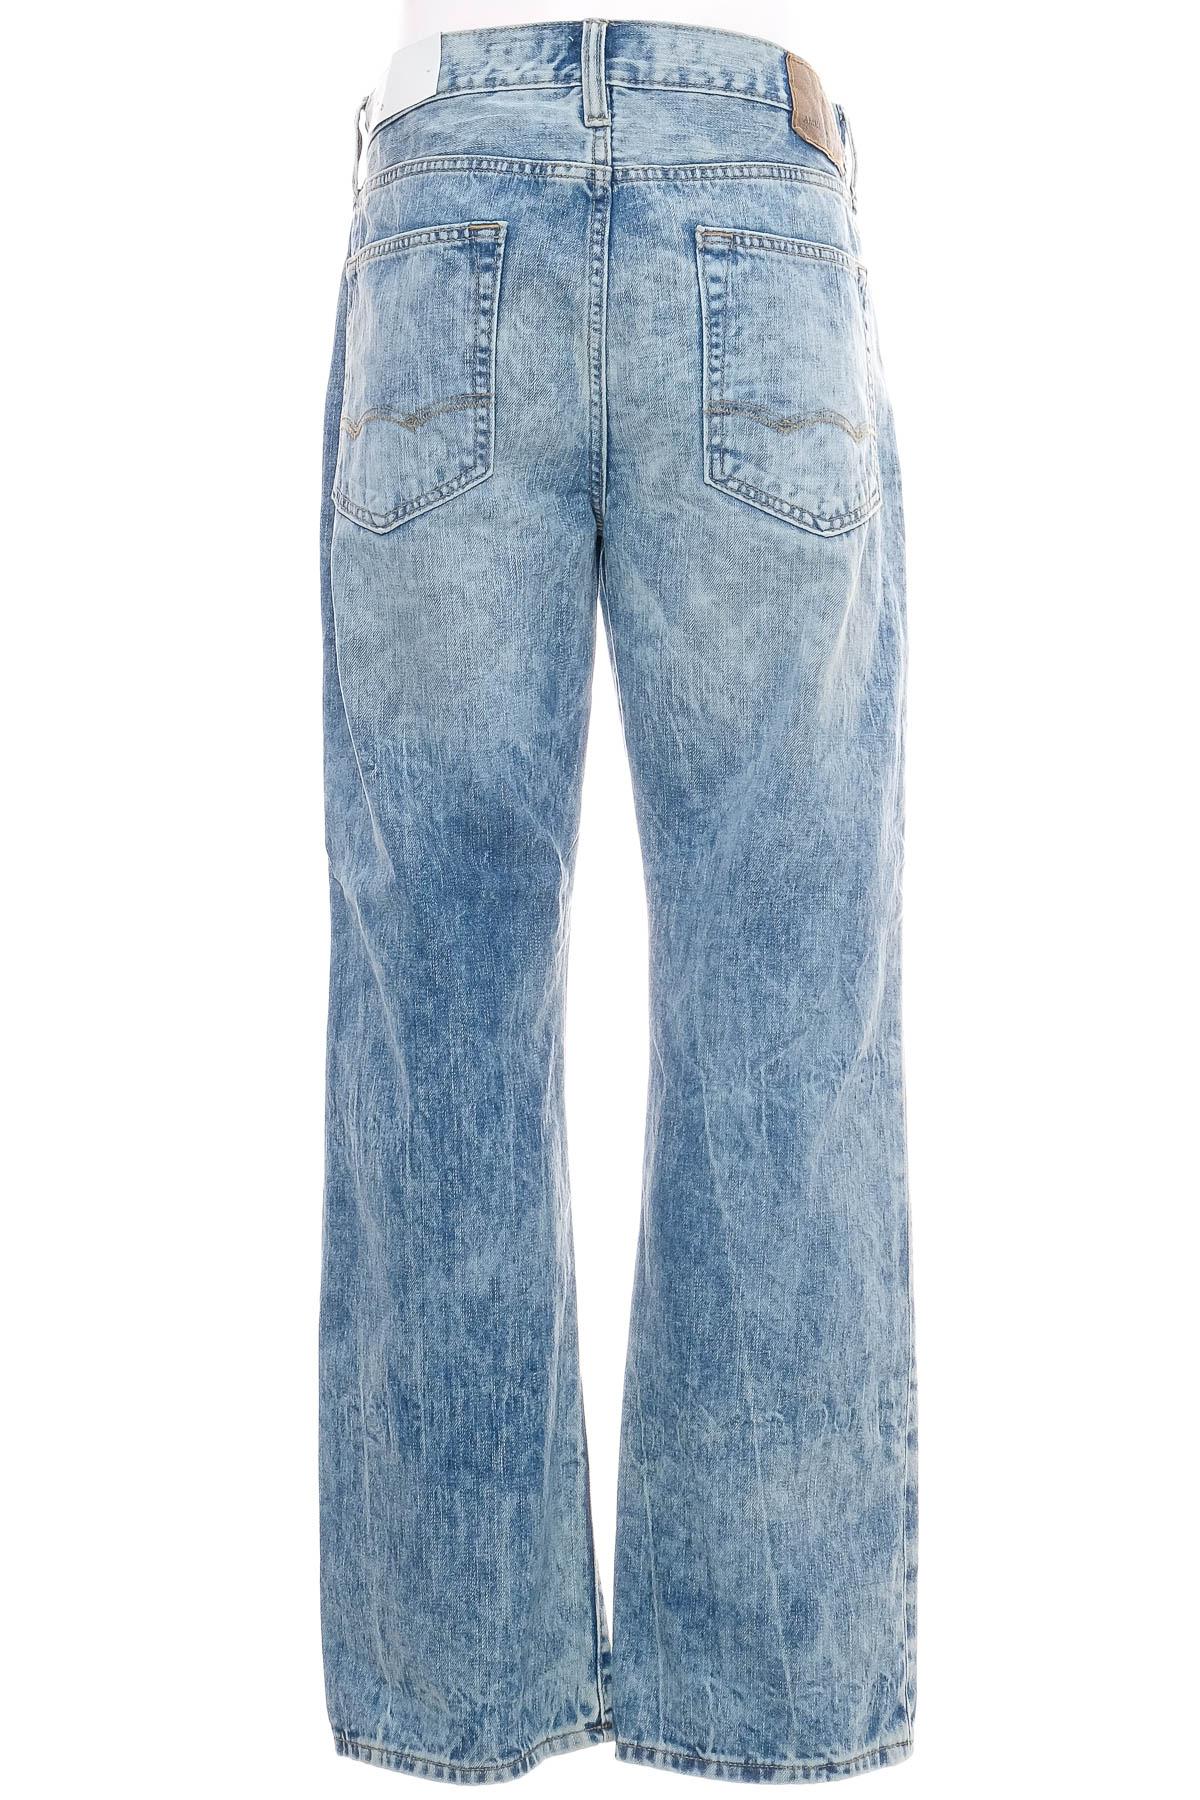 Men's jeans - American Eagle - 1